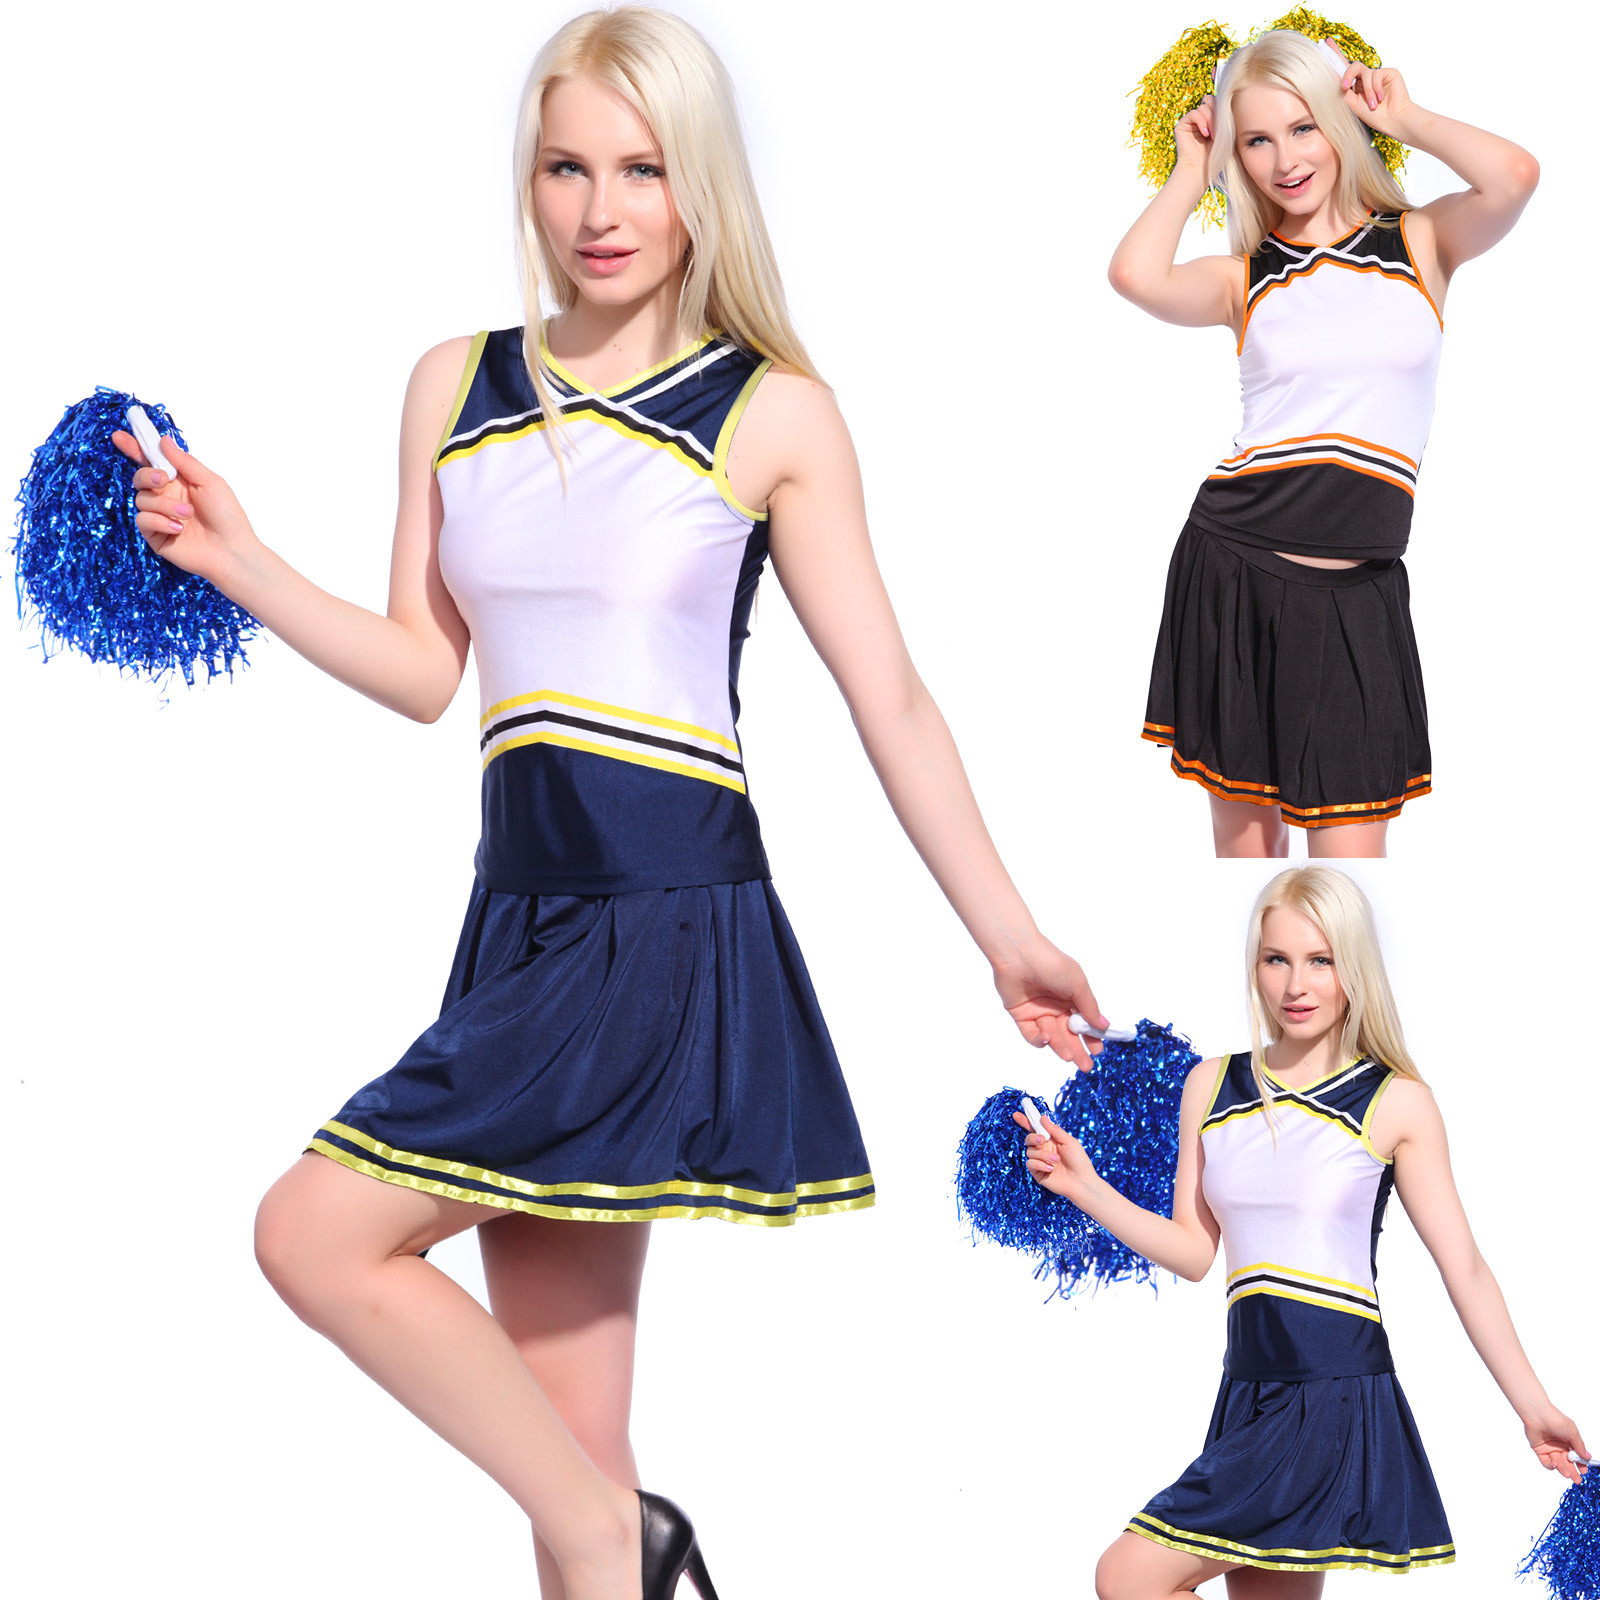 Best ideas about DIY Cheerleader Costume
. Save or Pin La s Girls Blank Printed Cheerleader Uniform Now.